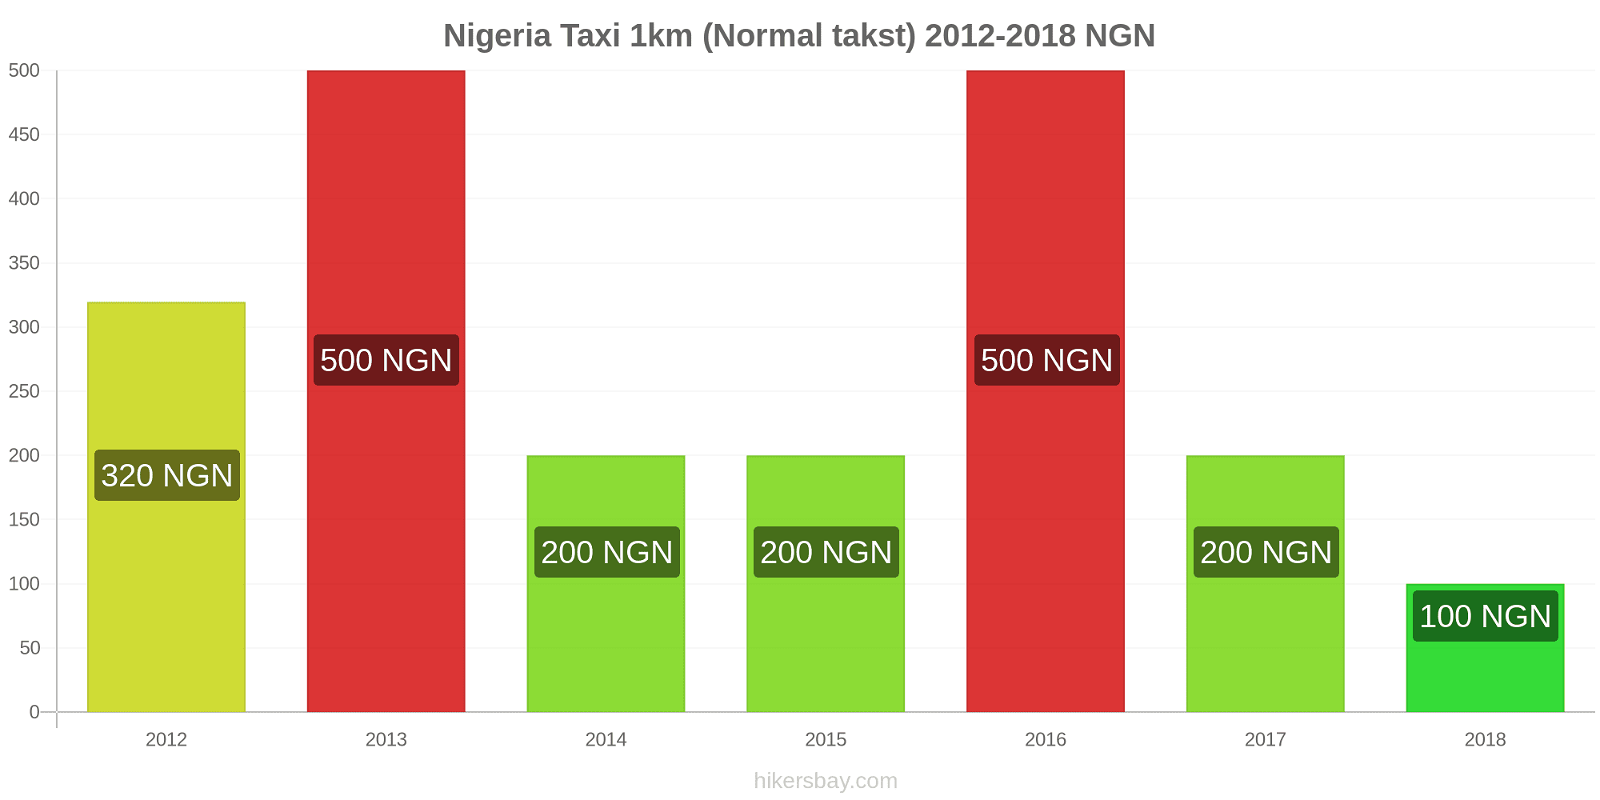 Nigeria prisændringer Taxi 1km (normal takst) hikersbay.com